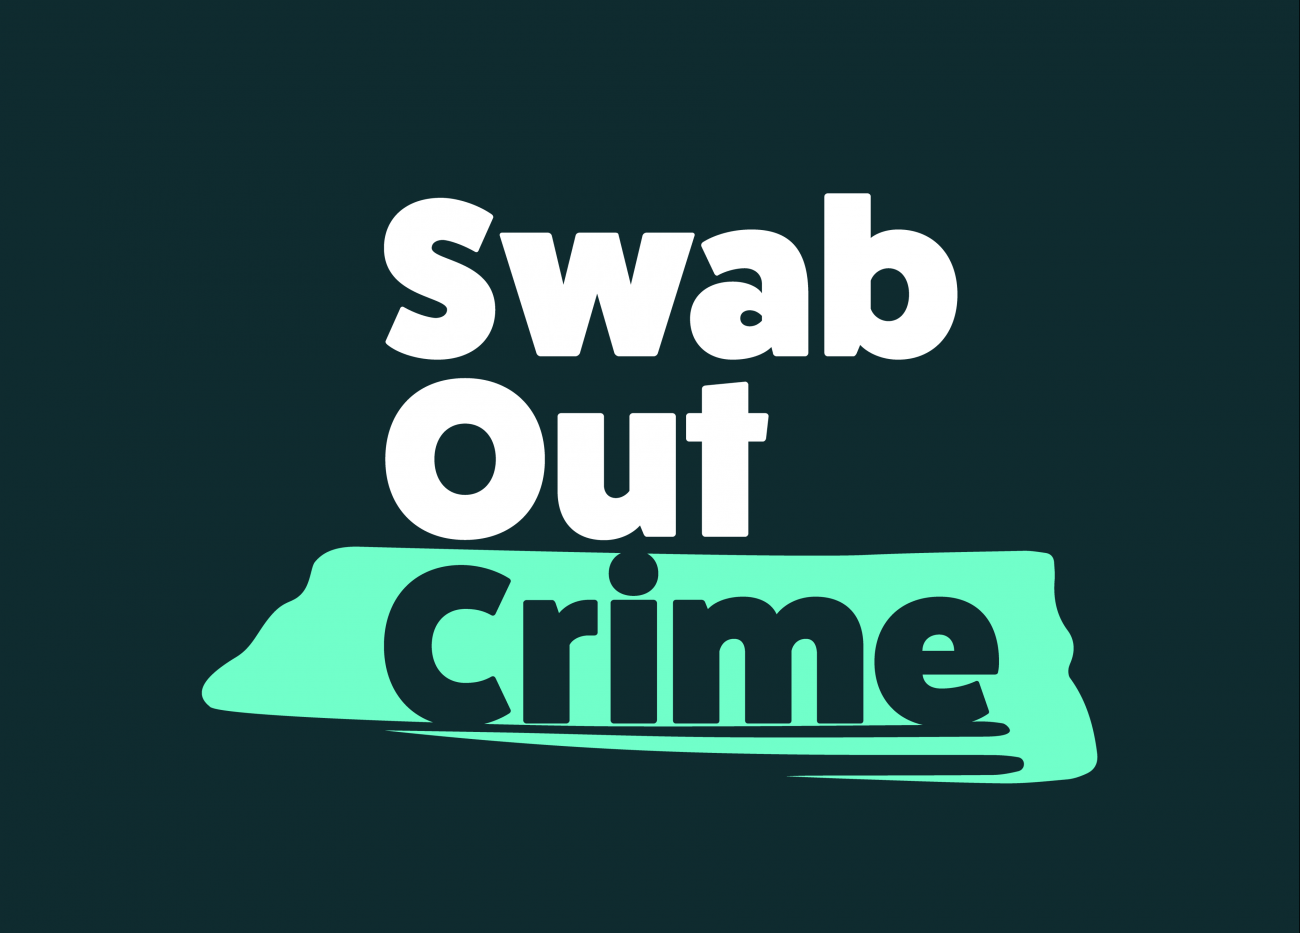 Swab Out Crime logo